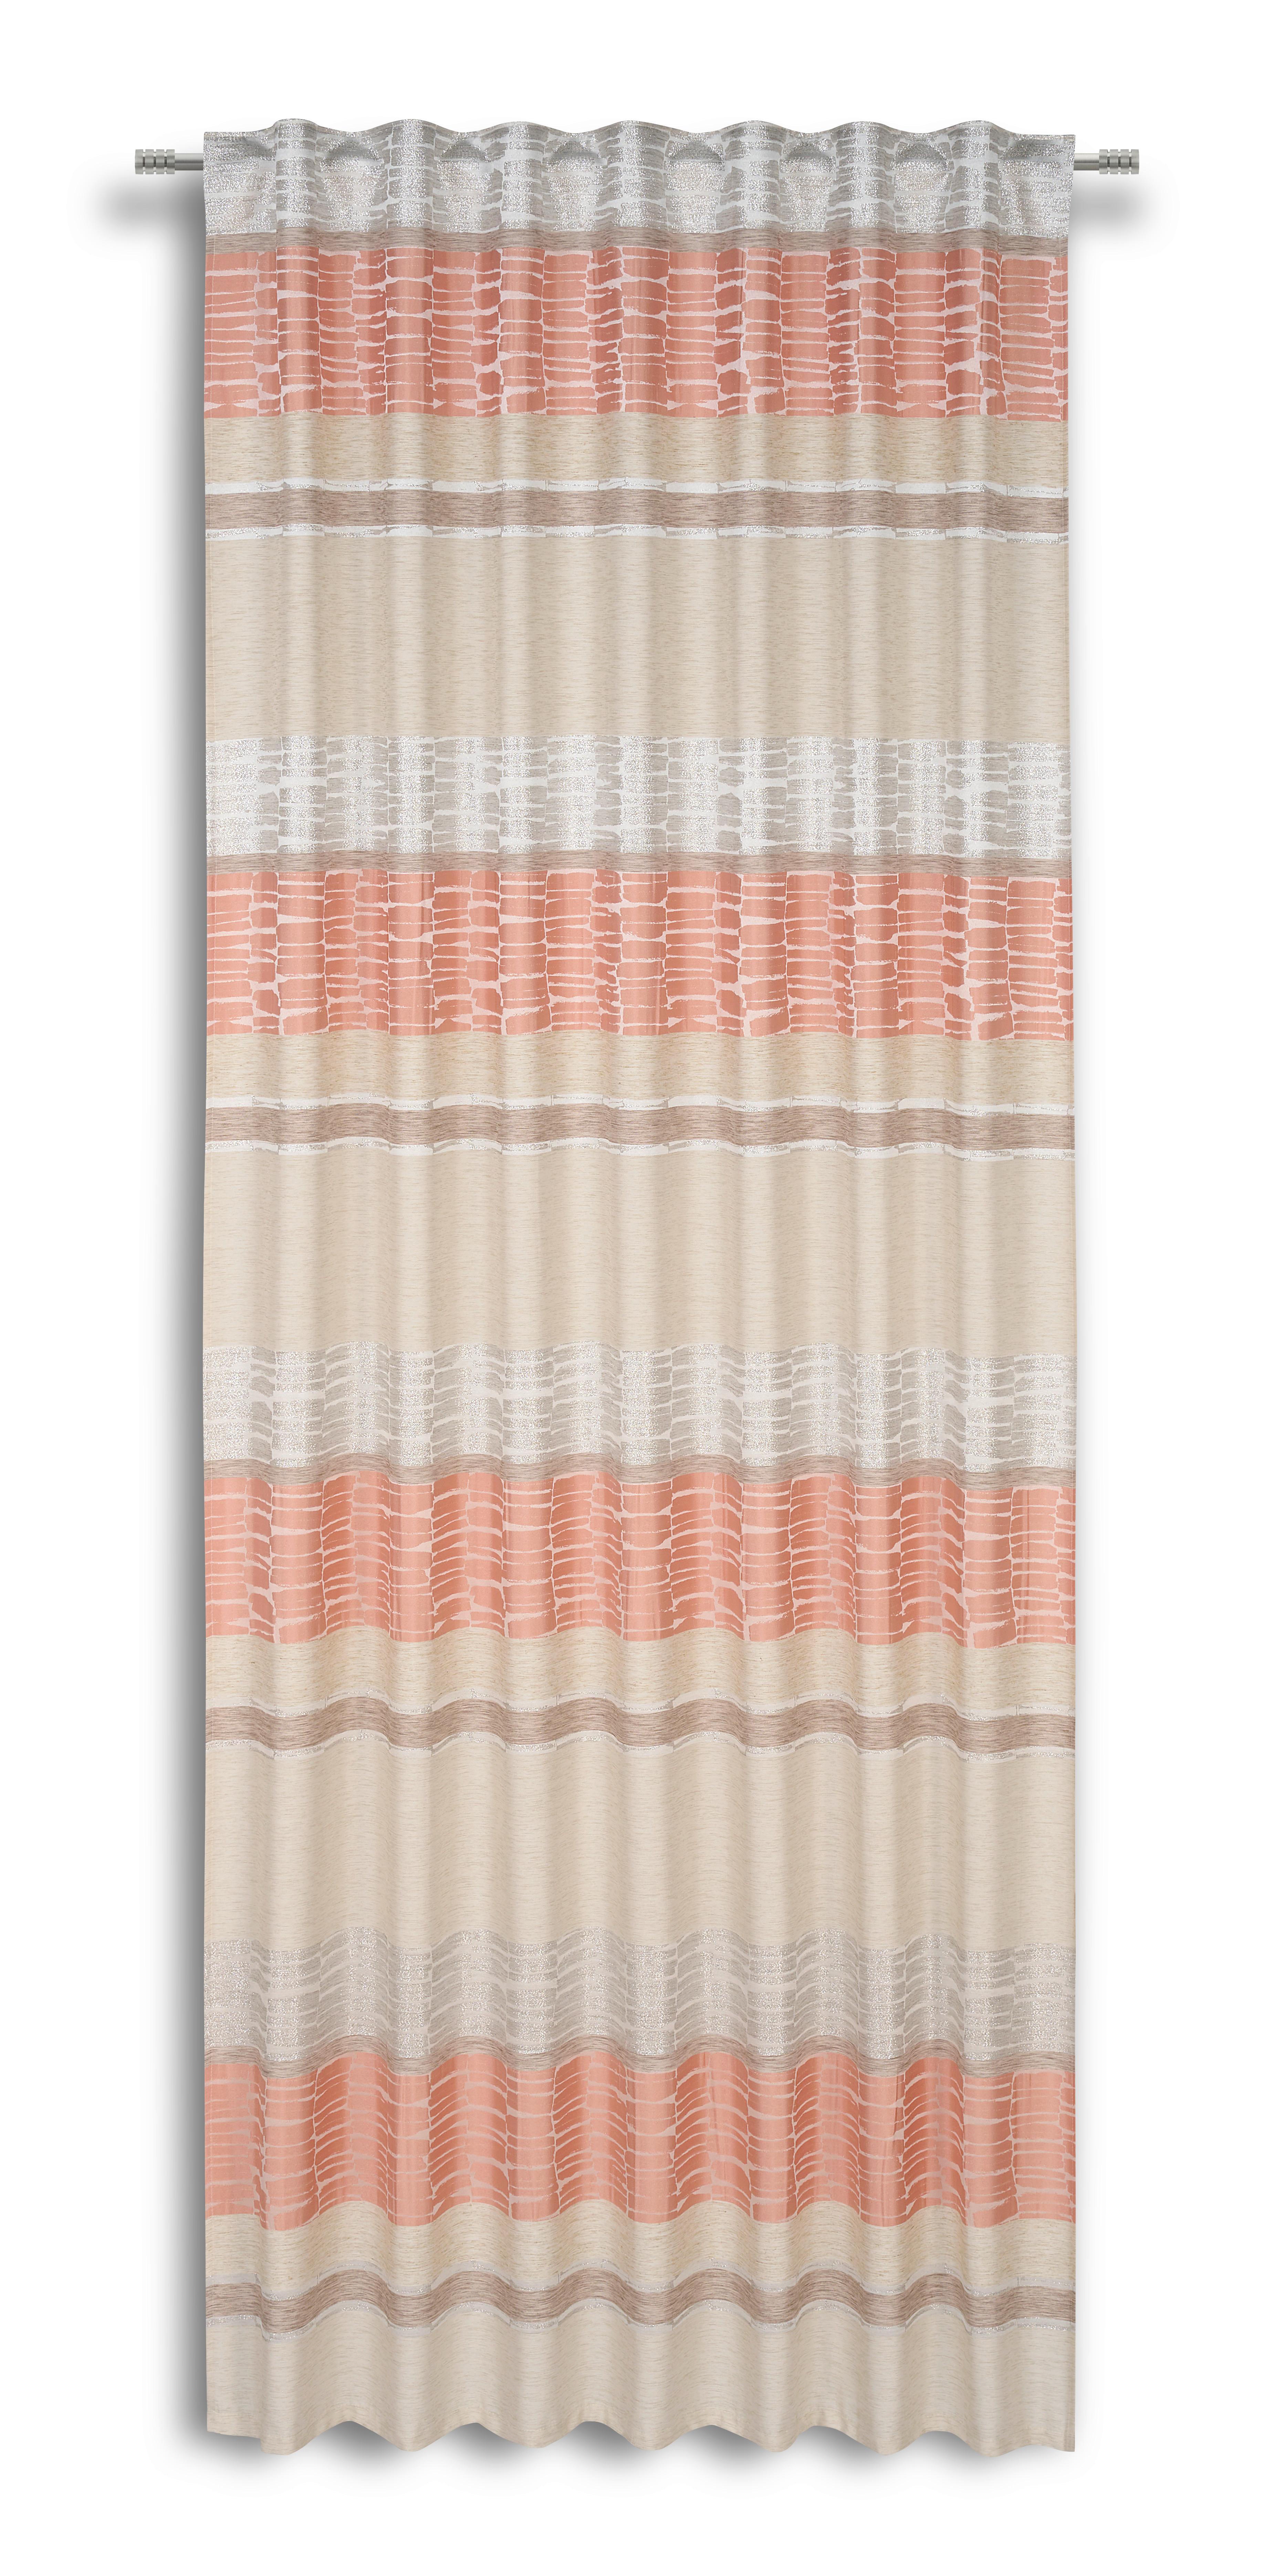 Vorhang mit Band Palma 140x245 cm Rosa - Rosa, MODERN, Textil (140/245cm) - Luca Bessoni